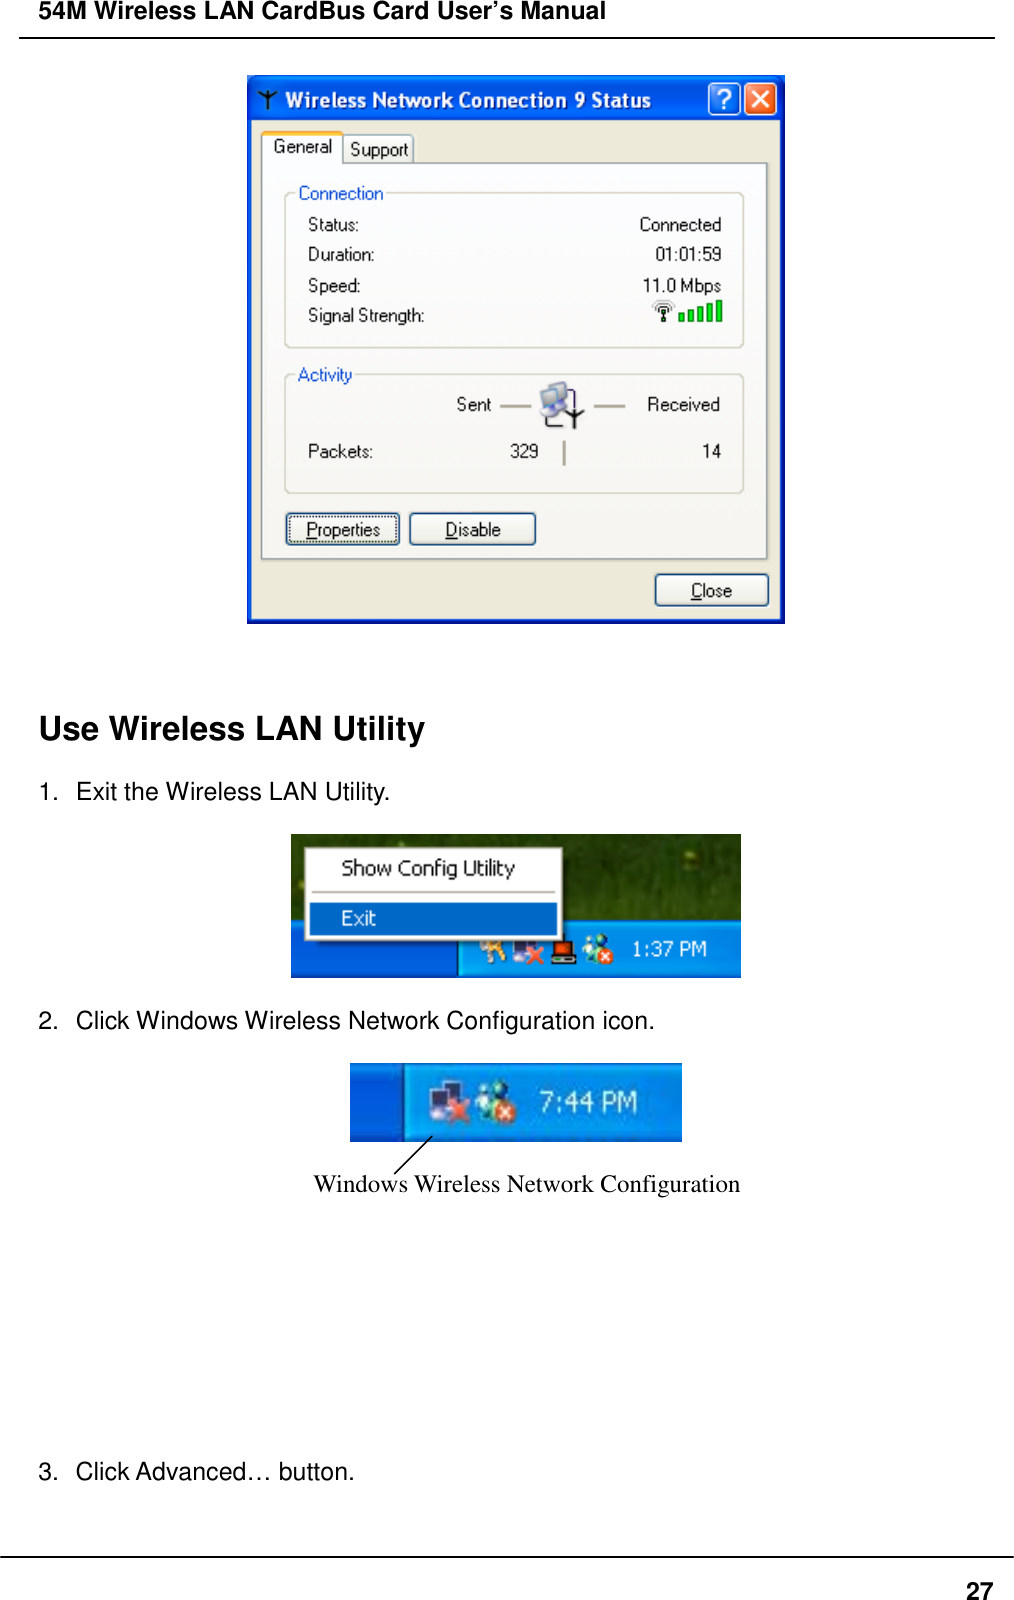 54M Wireless LAN CardBus Card User’s Manual27Use Wireless LAN Utility1.  Exit the Wireless LAN Utility.2.  Click Windows Wireless Network Configuration icon.Windows Wireless Network Configuration3. Click Advanced… button.